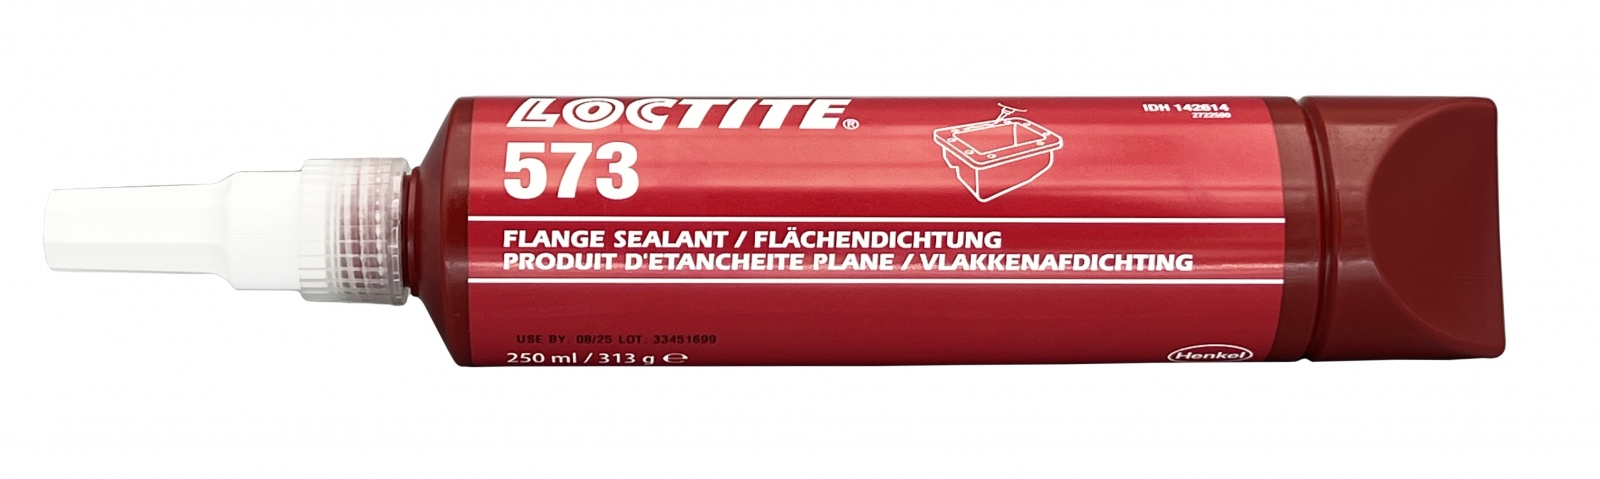 pics/Loctite/573/loctite-573-flange-sealant-flexible-green--idh-142614-tube-250ml-313g-ol.jpg